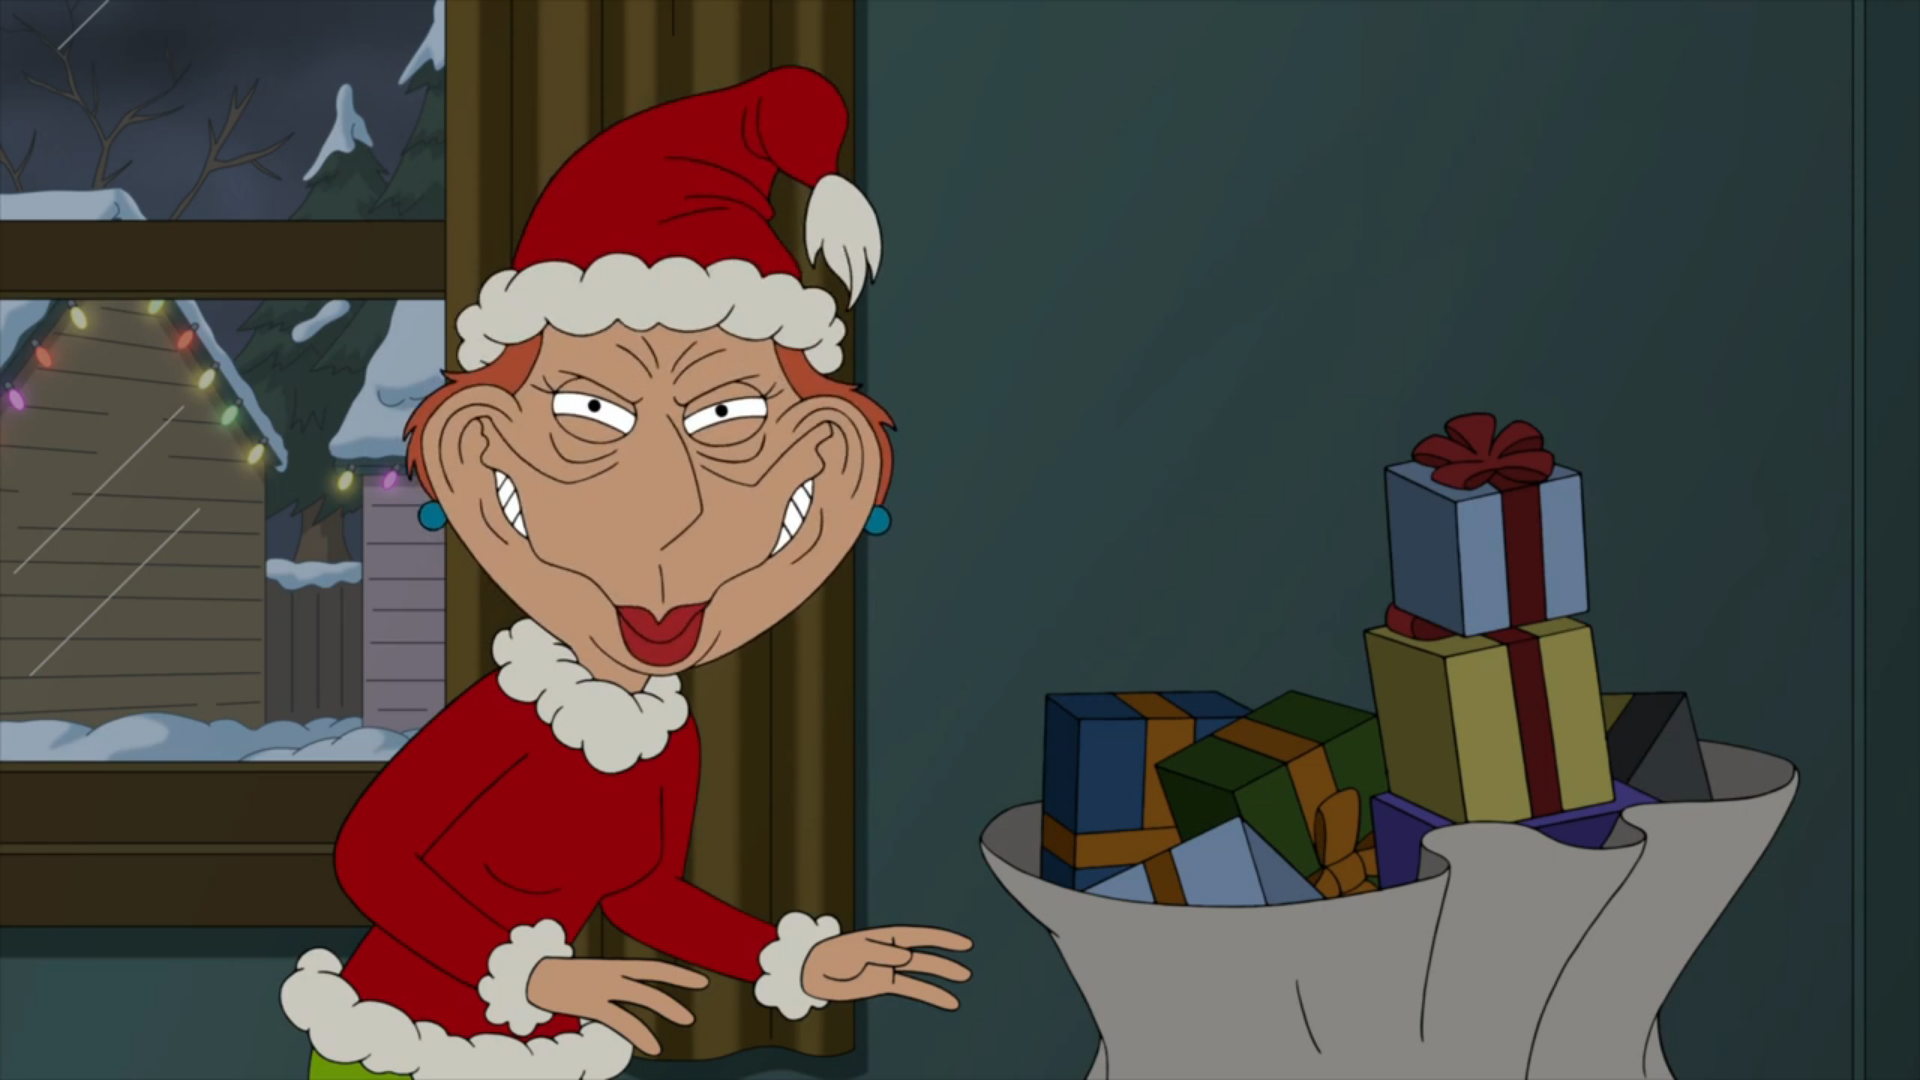 Grinch Santa Like A Good Neighbor Stay Over There Christmas